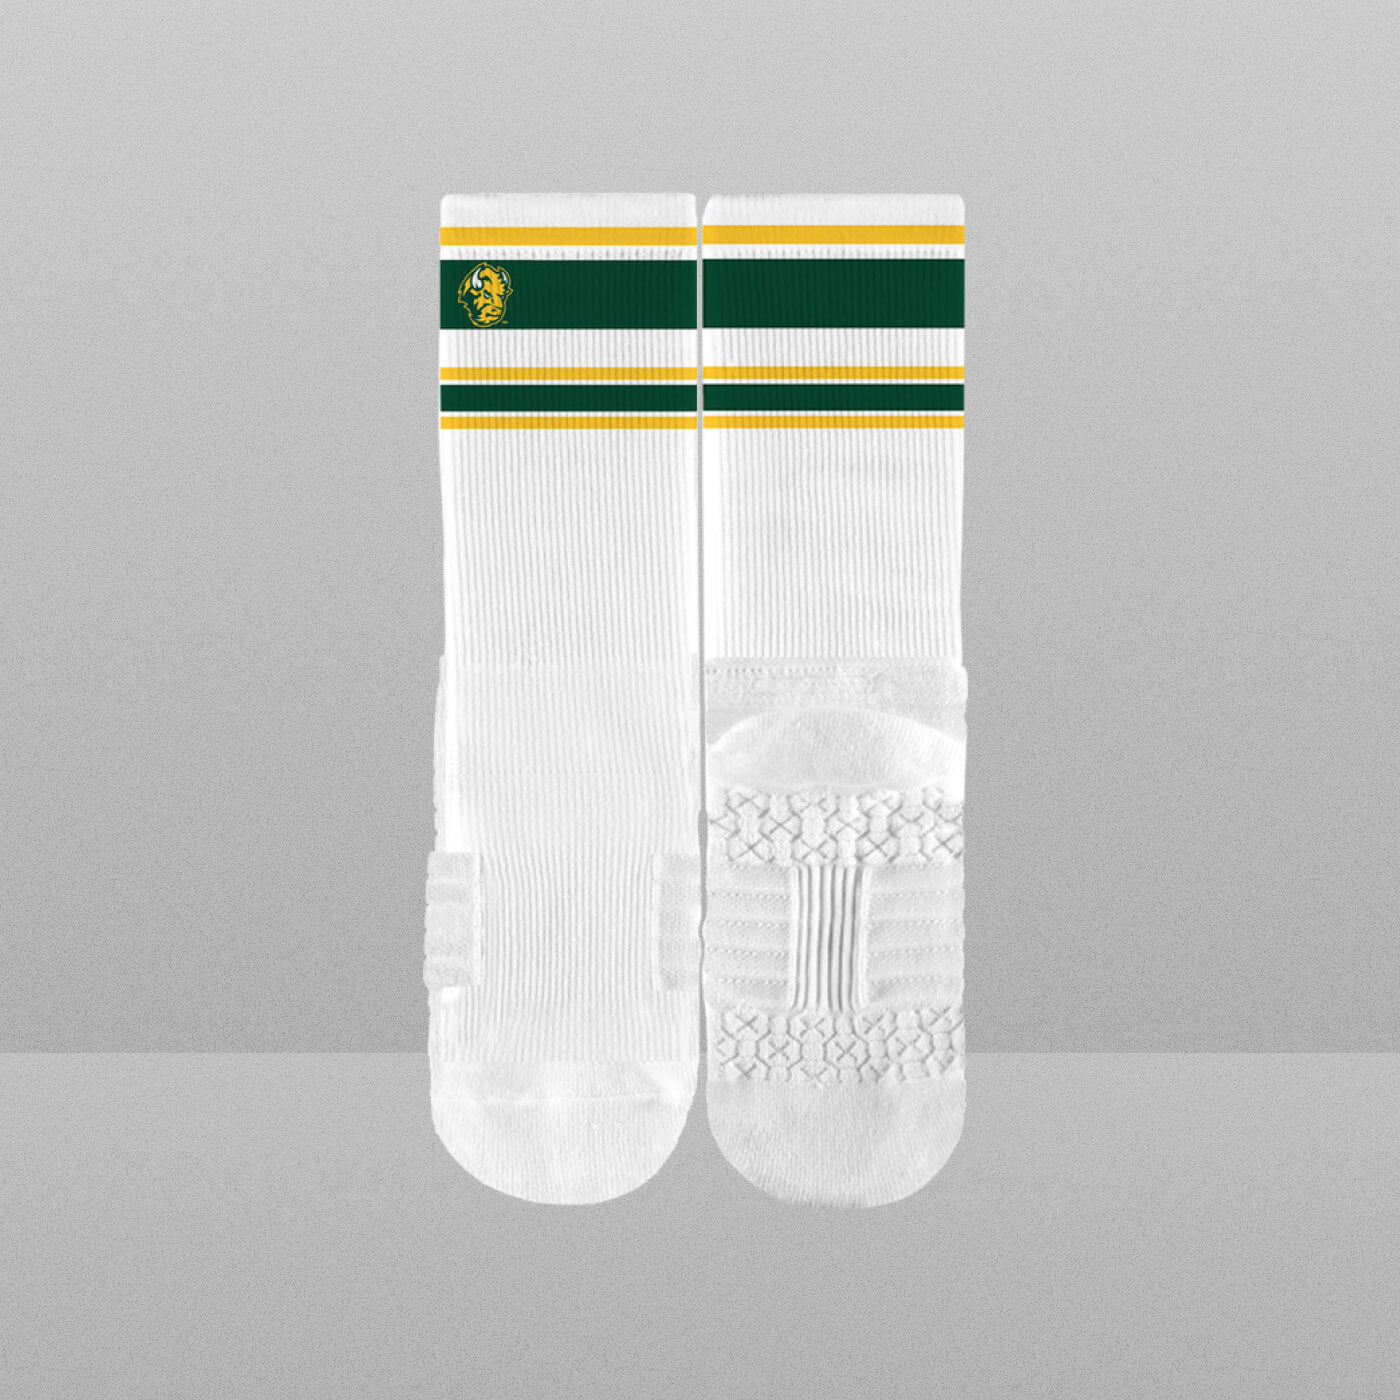 Celtics Varsity Crew Socks - Clemson Sock Shop